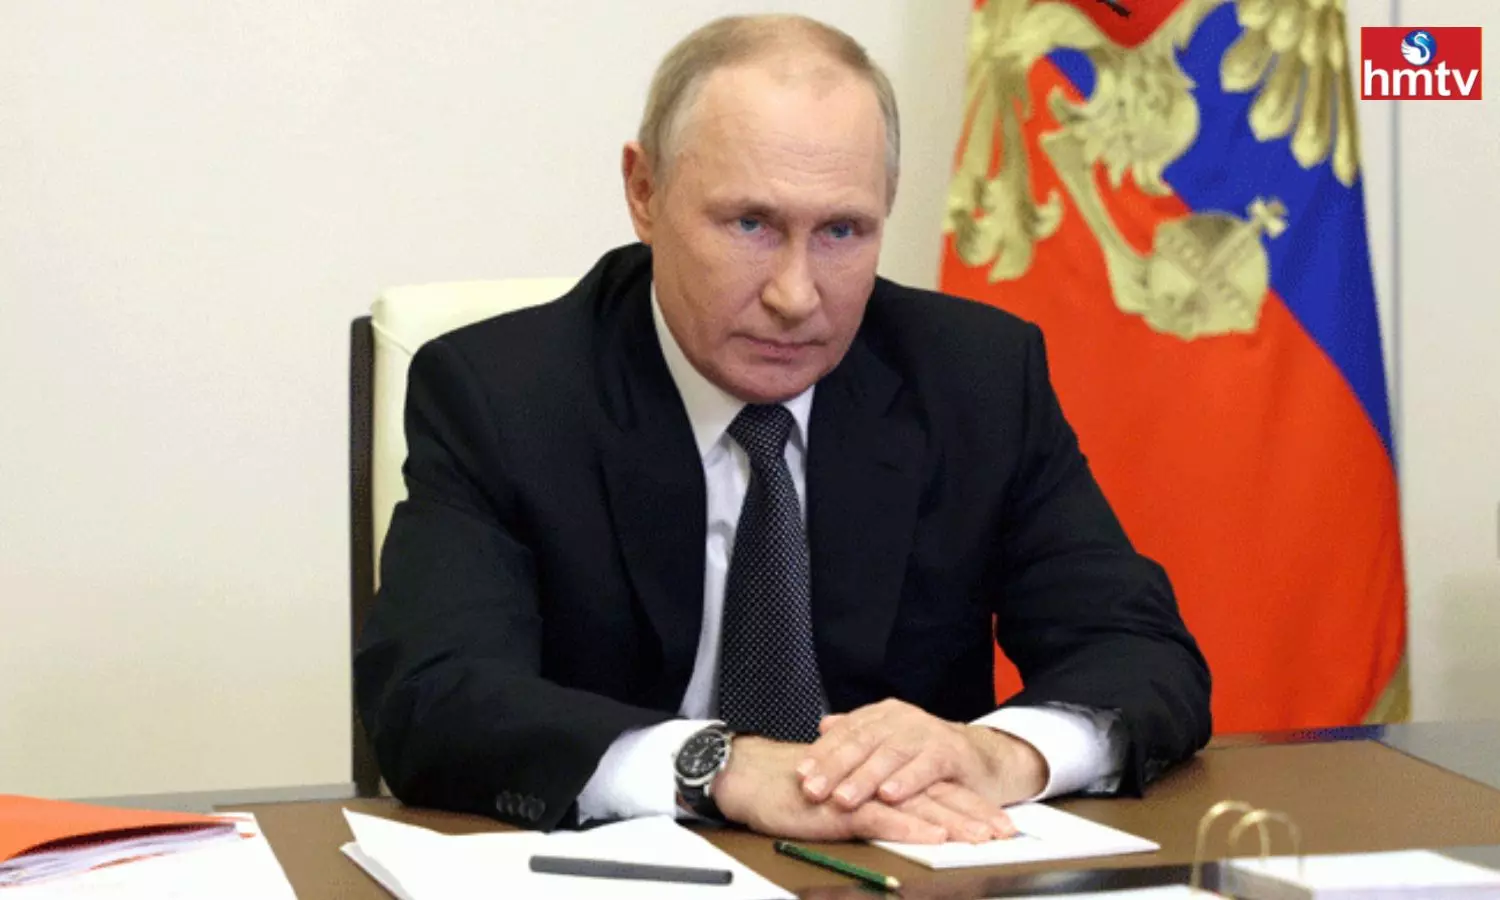 Talks Underway to Replace Vladimir Putin as Russia President Says Ukrainian Official